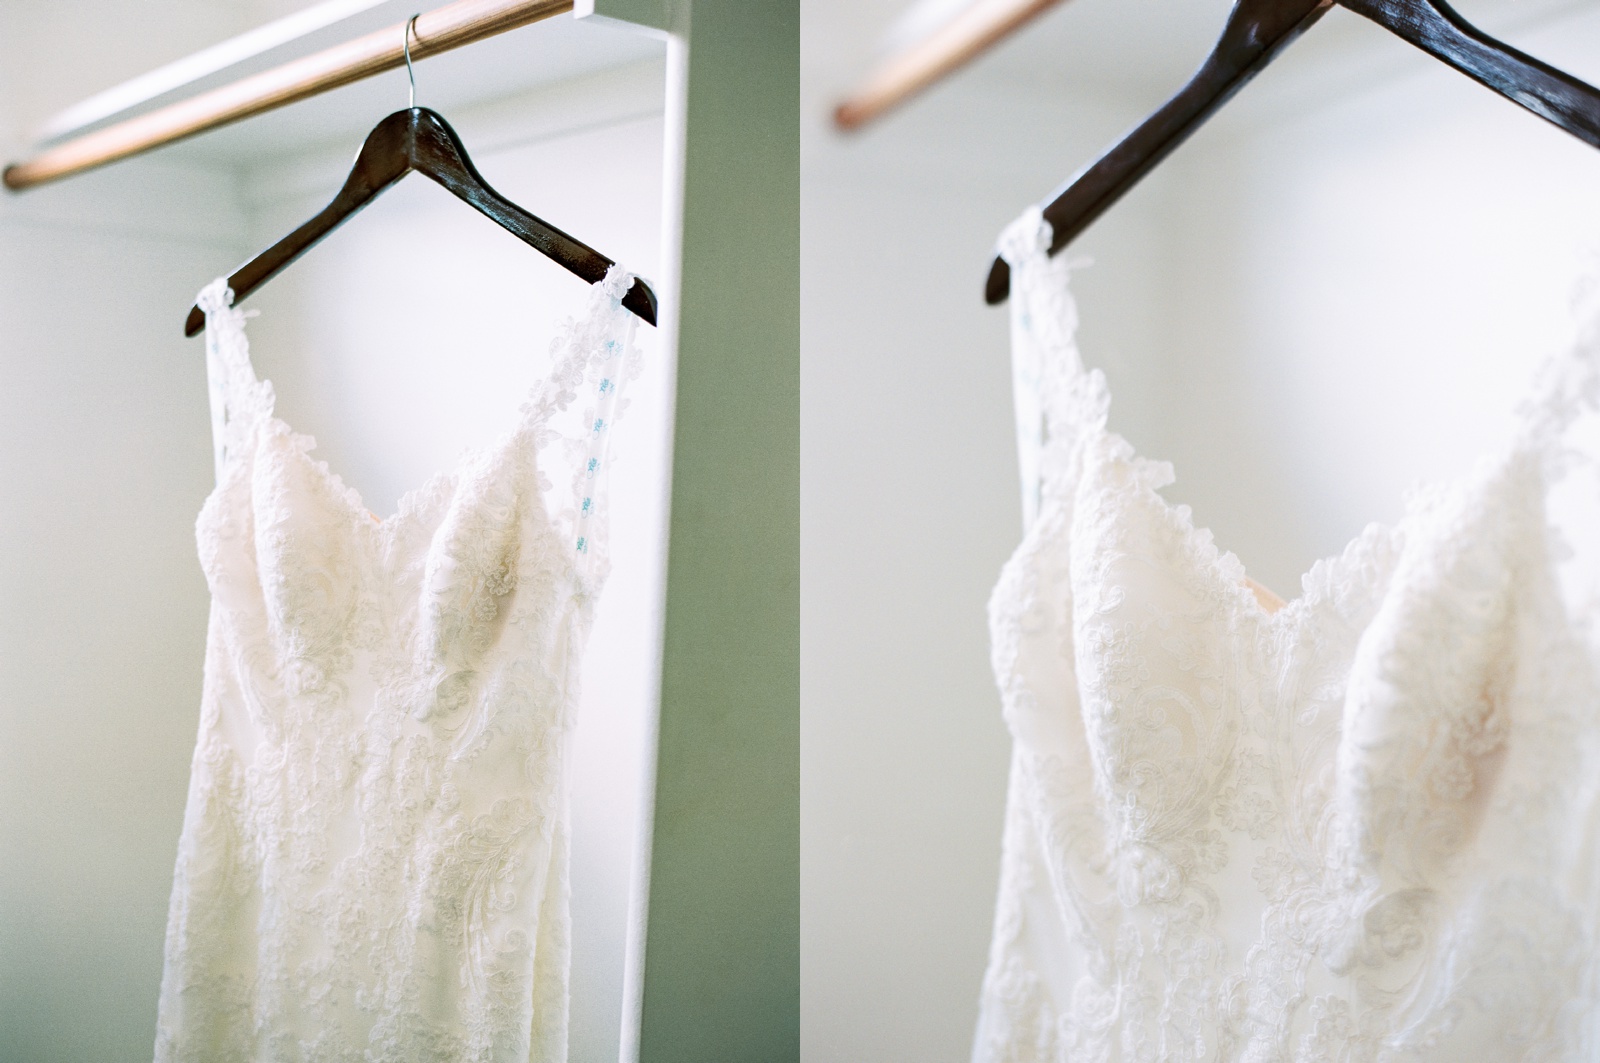 White lace wedding dress hanging